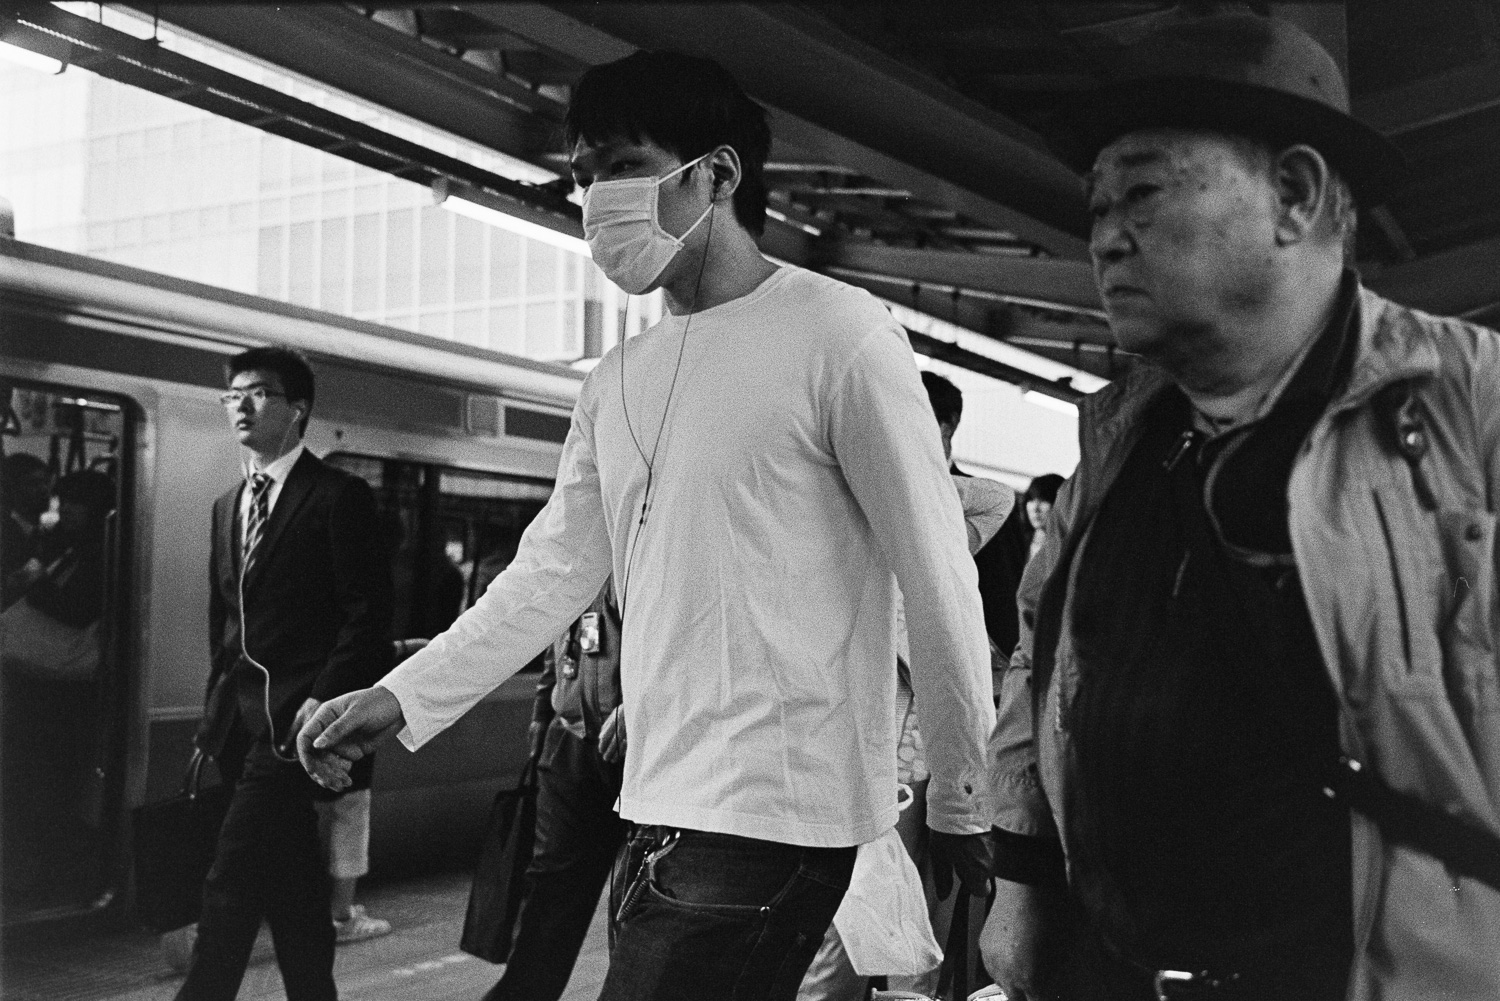 2017-04-22 - Roll 132 - 013-Nick-Bedford,-Photographer-Black and White, Film, Japan, Kodak Tri-X 400, Rodinal, Street Photography, Tokyo.jpg